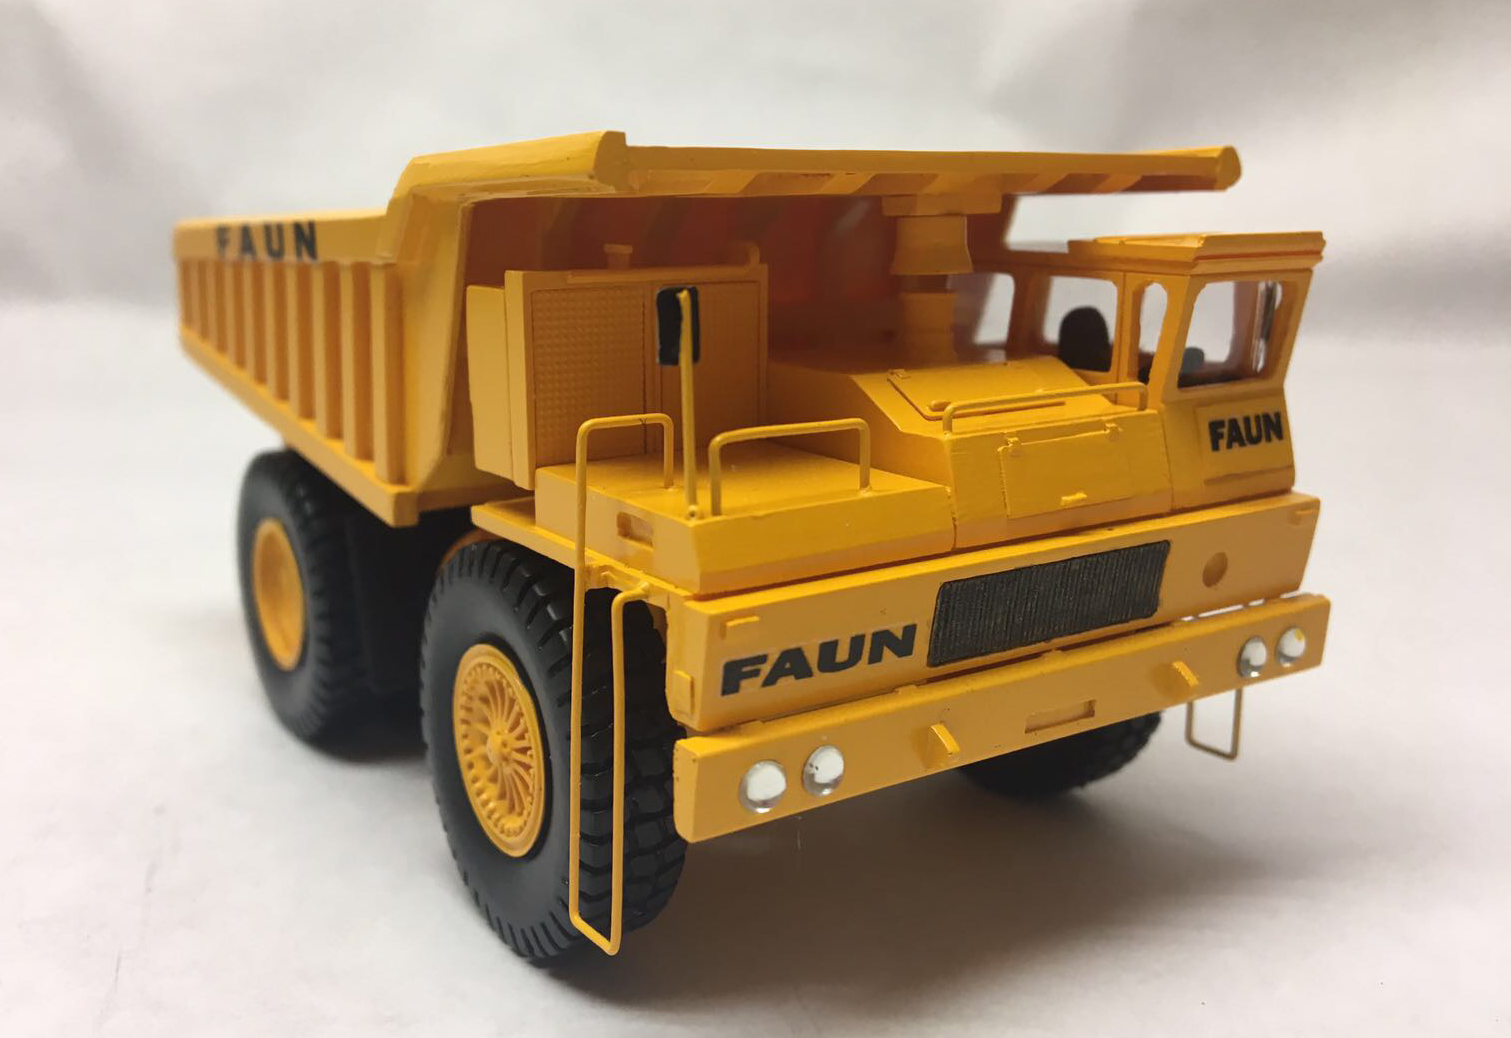 Details about   HO 1/87 Faun K80/W 4x2 Dump Truck Ready Made Resin Model by Fankit Models 